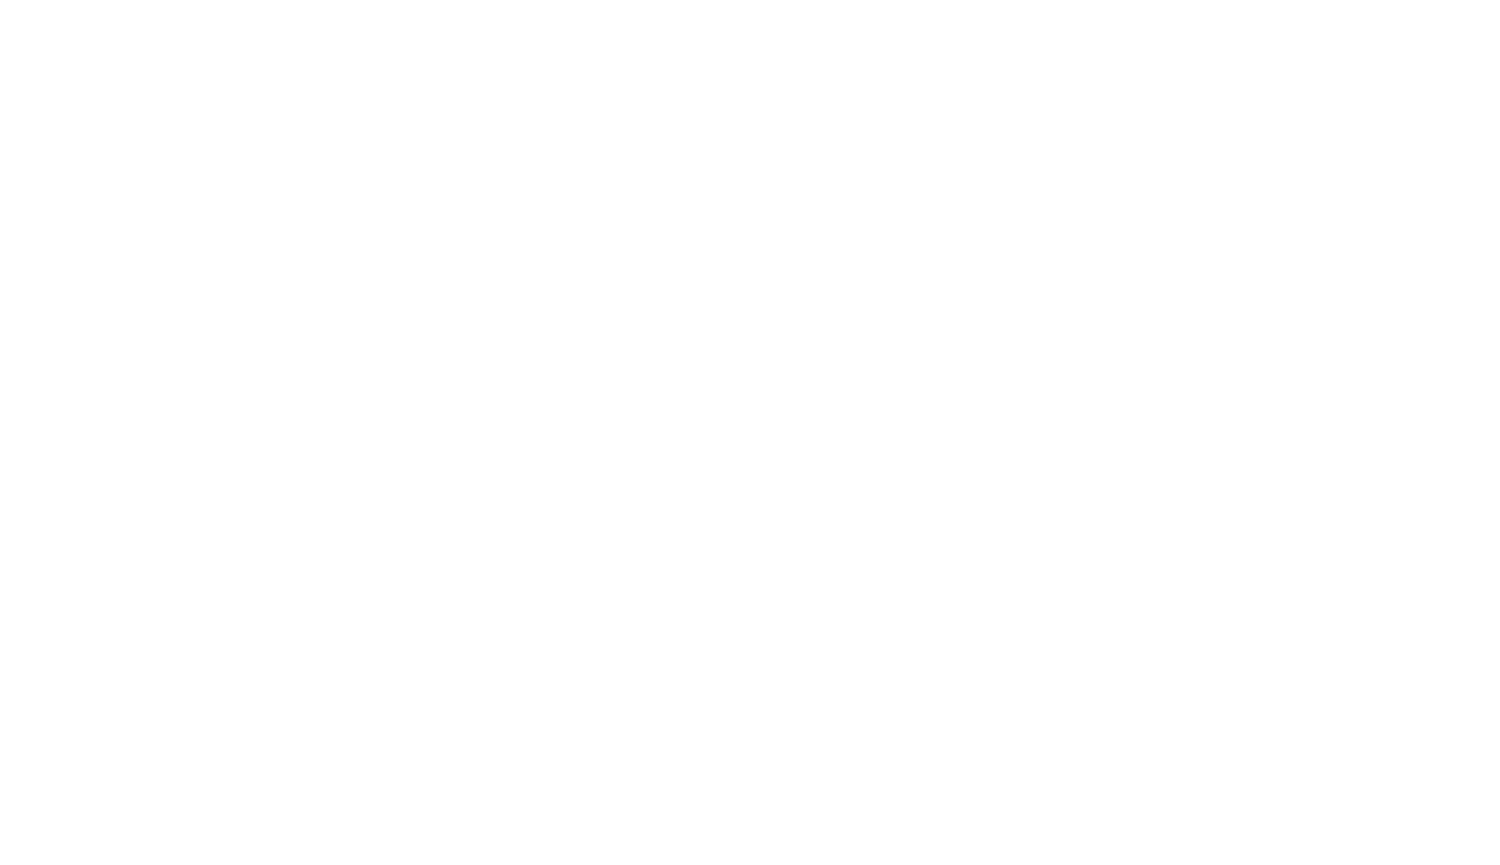 The Cole Academy of Toronto